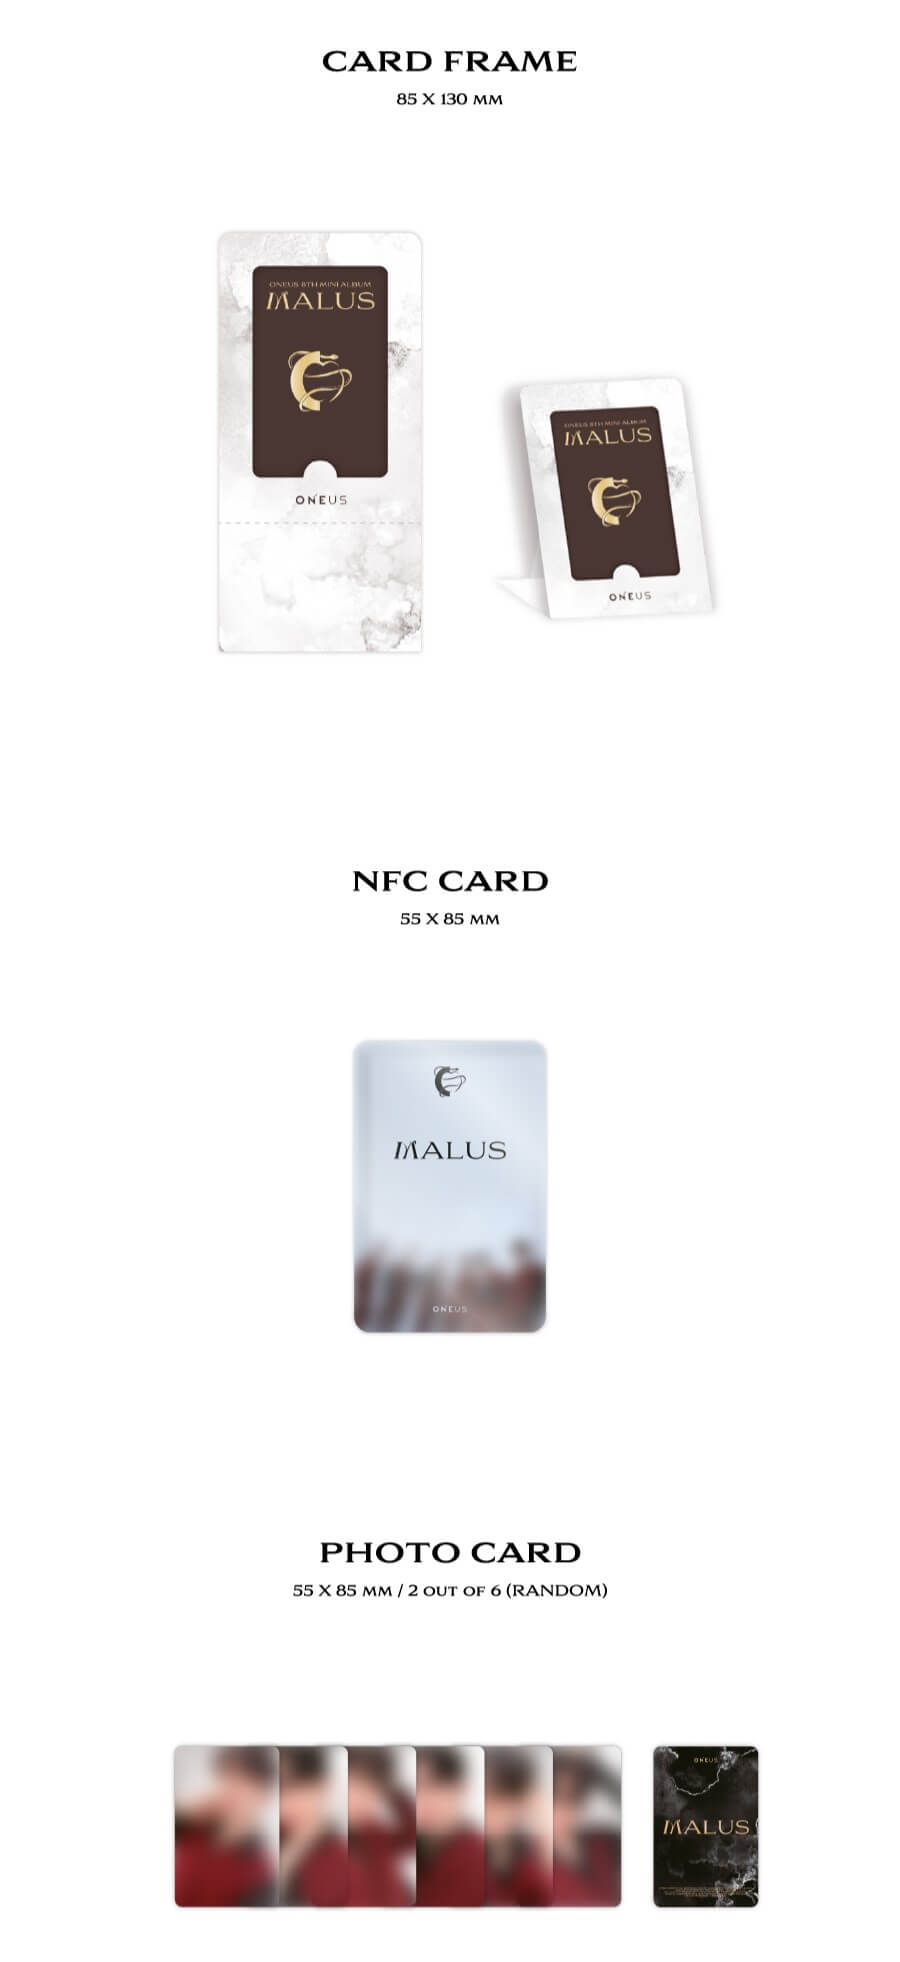 ONEUS MALUS POCA Version Inclusions Card Frame NFC Card Photocards